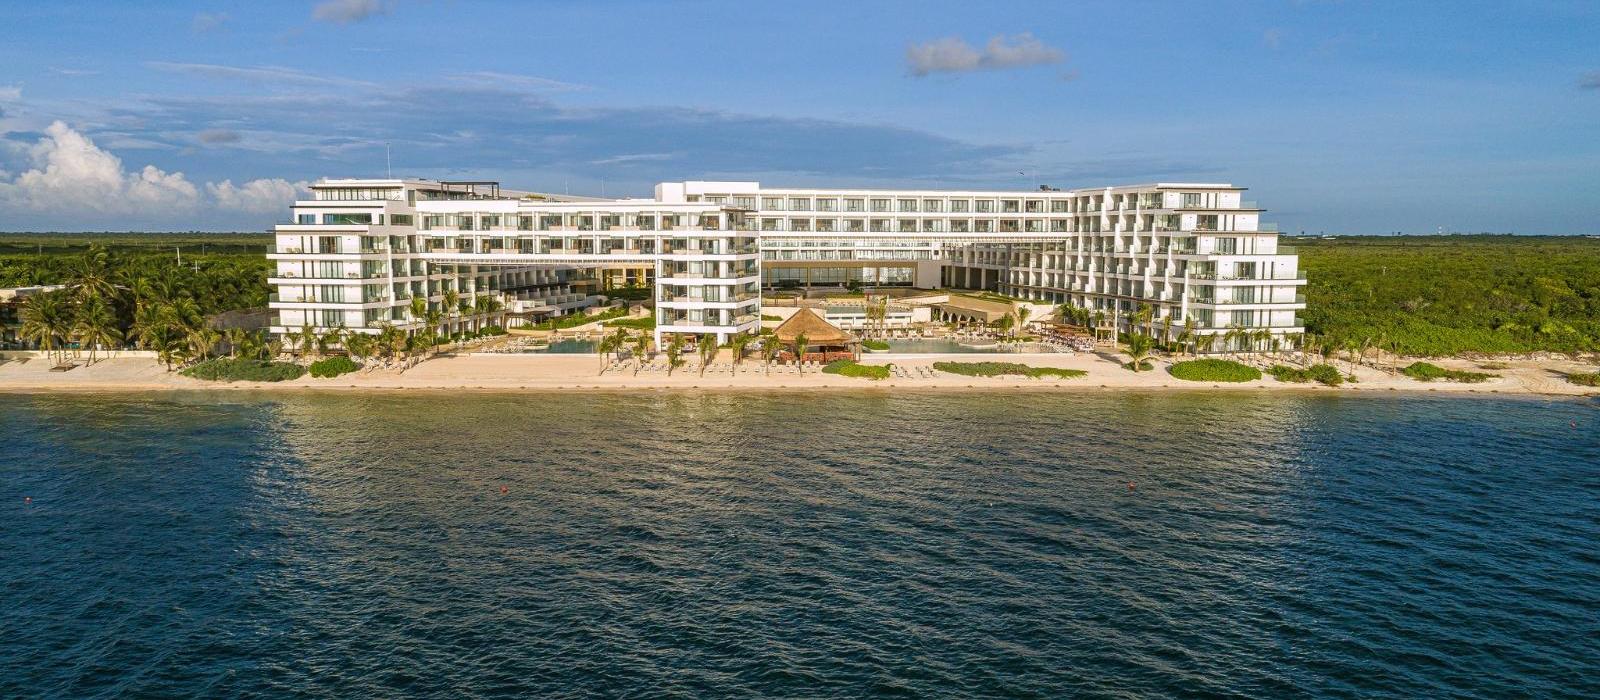 森雅度假水疗酒店(Sensira Resort & Spa - Riviera Maya) 图片  www.lhw.cn